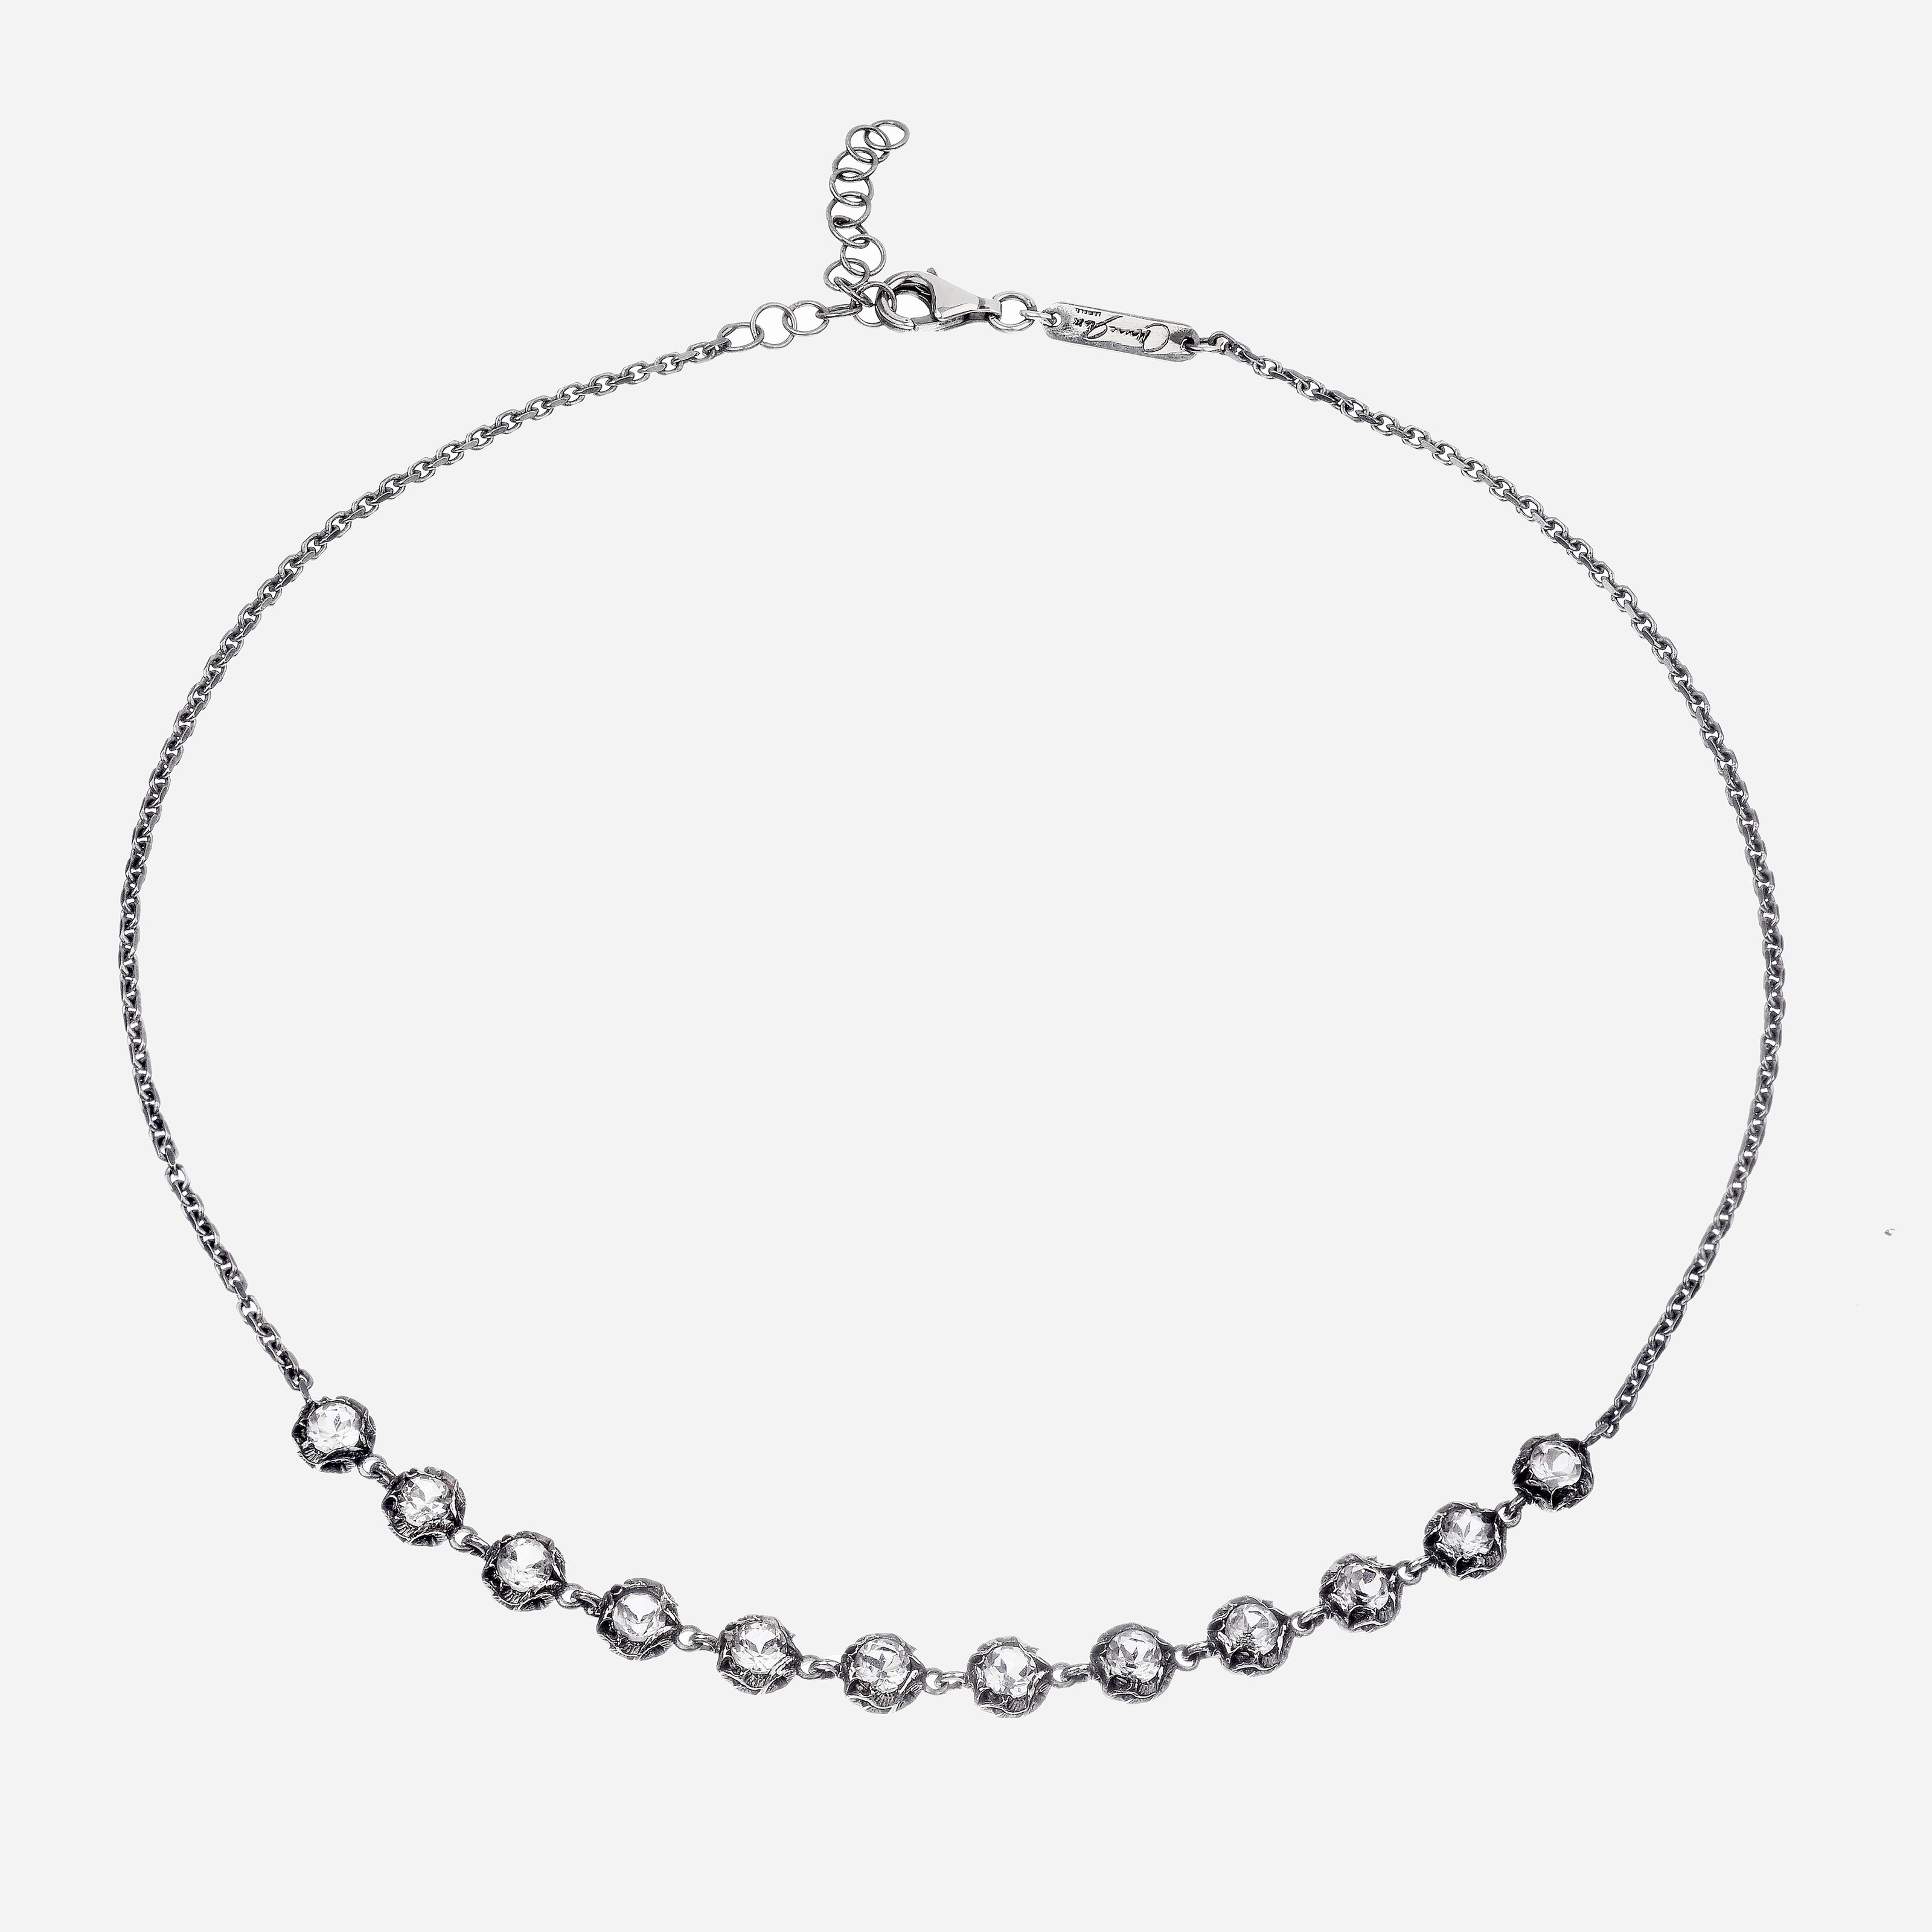 Shri choker necklace, 12 round cut micro stones